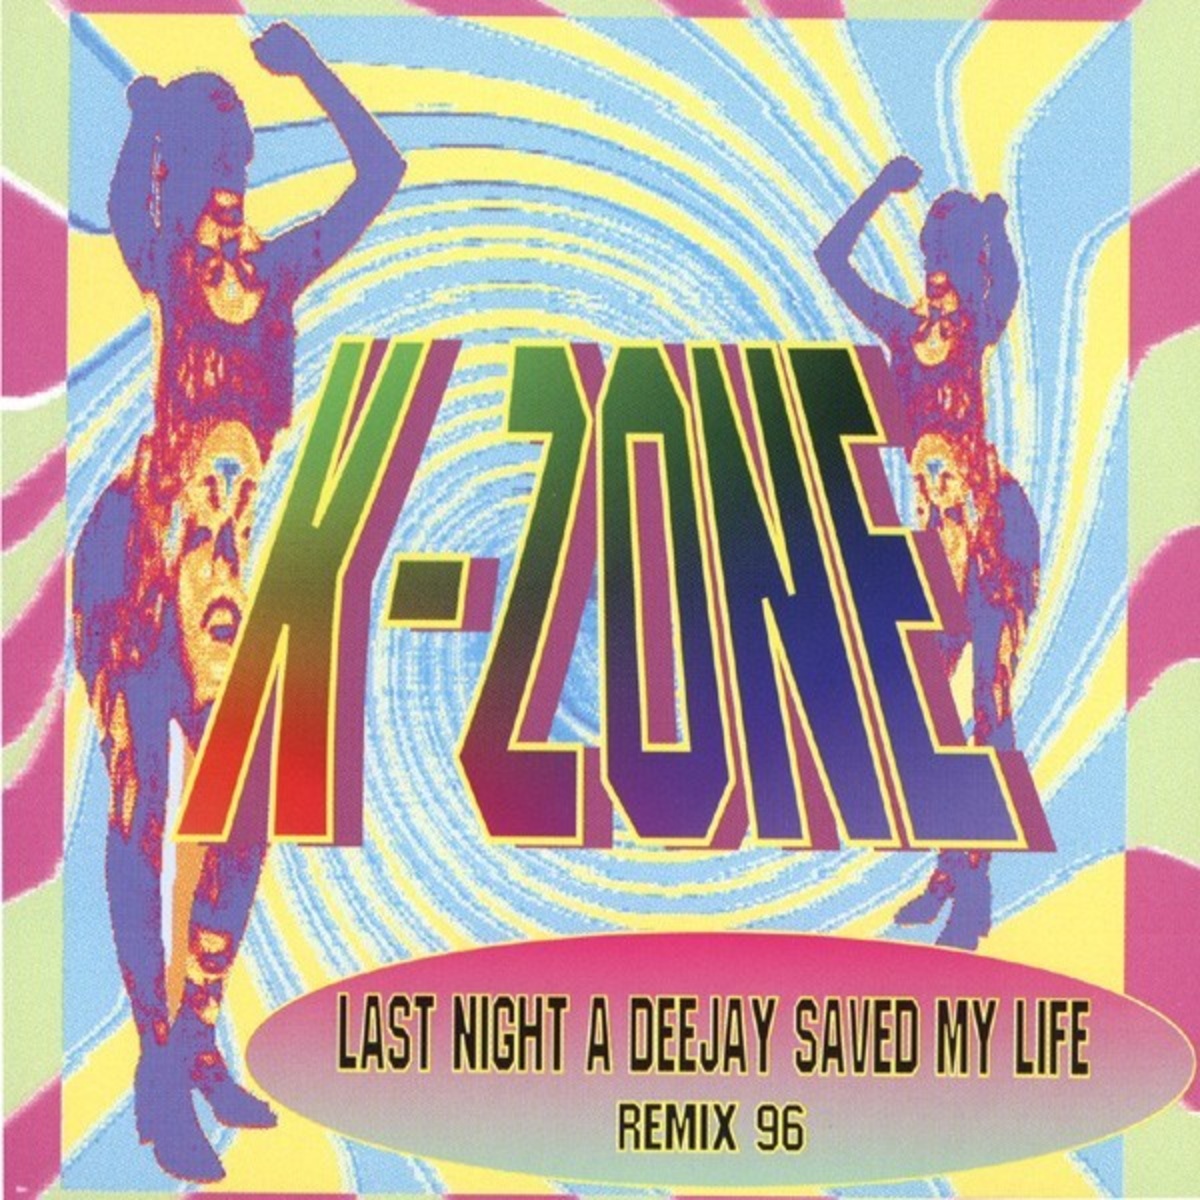 K-Zone - Last Night A Deejay Saved My Life (Remix 96) (CD Single) (1996)